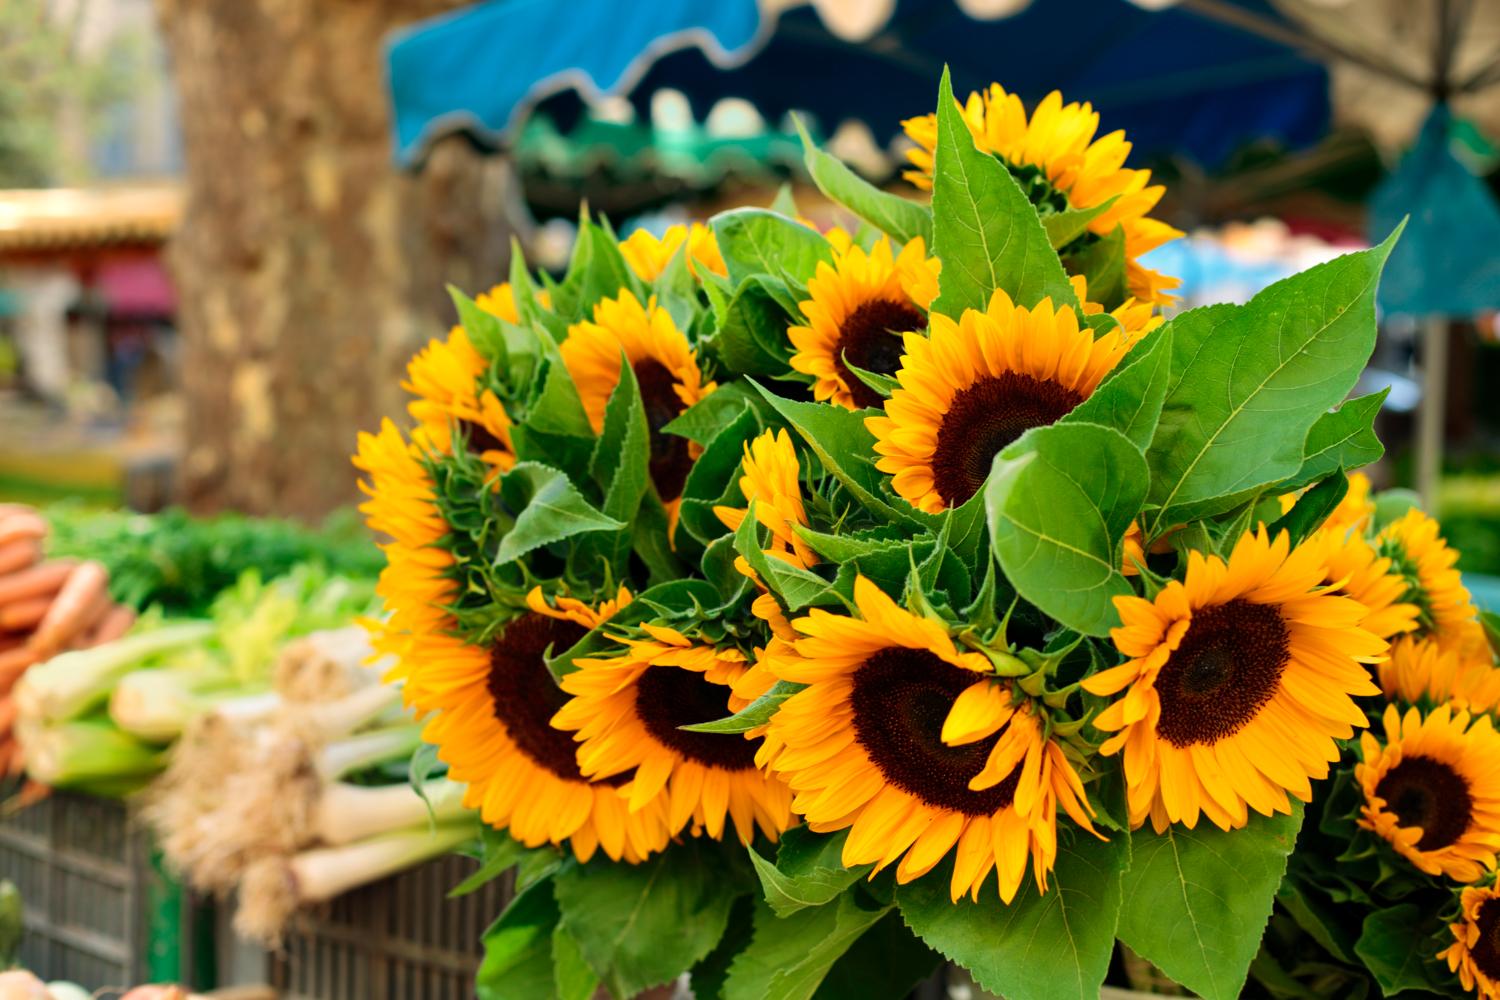 village market with sunflowers